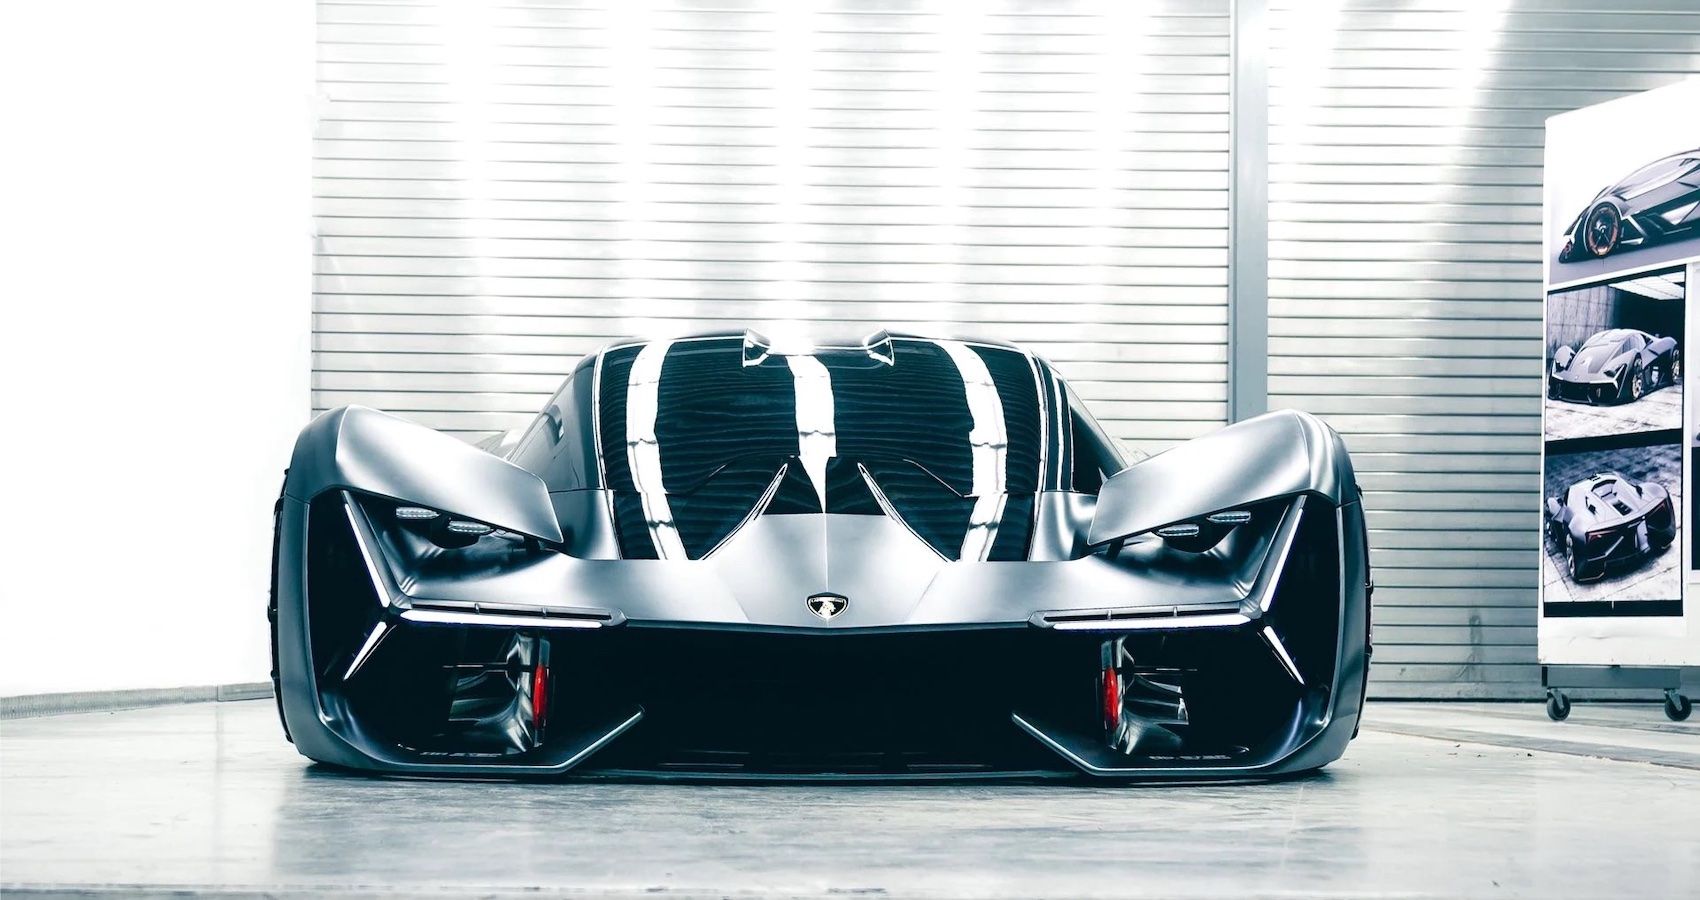 Lamborghini Terzo Millennio Is The World's First Self-Repairing Supercar -  DriveSpark News